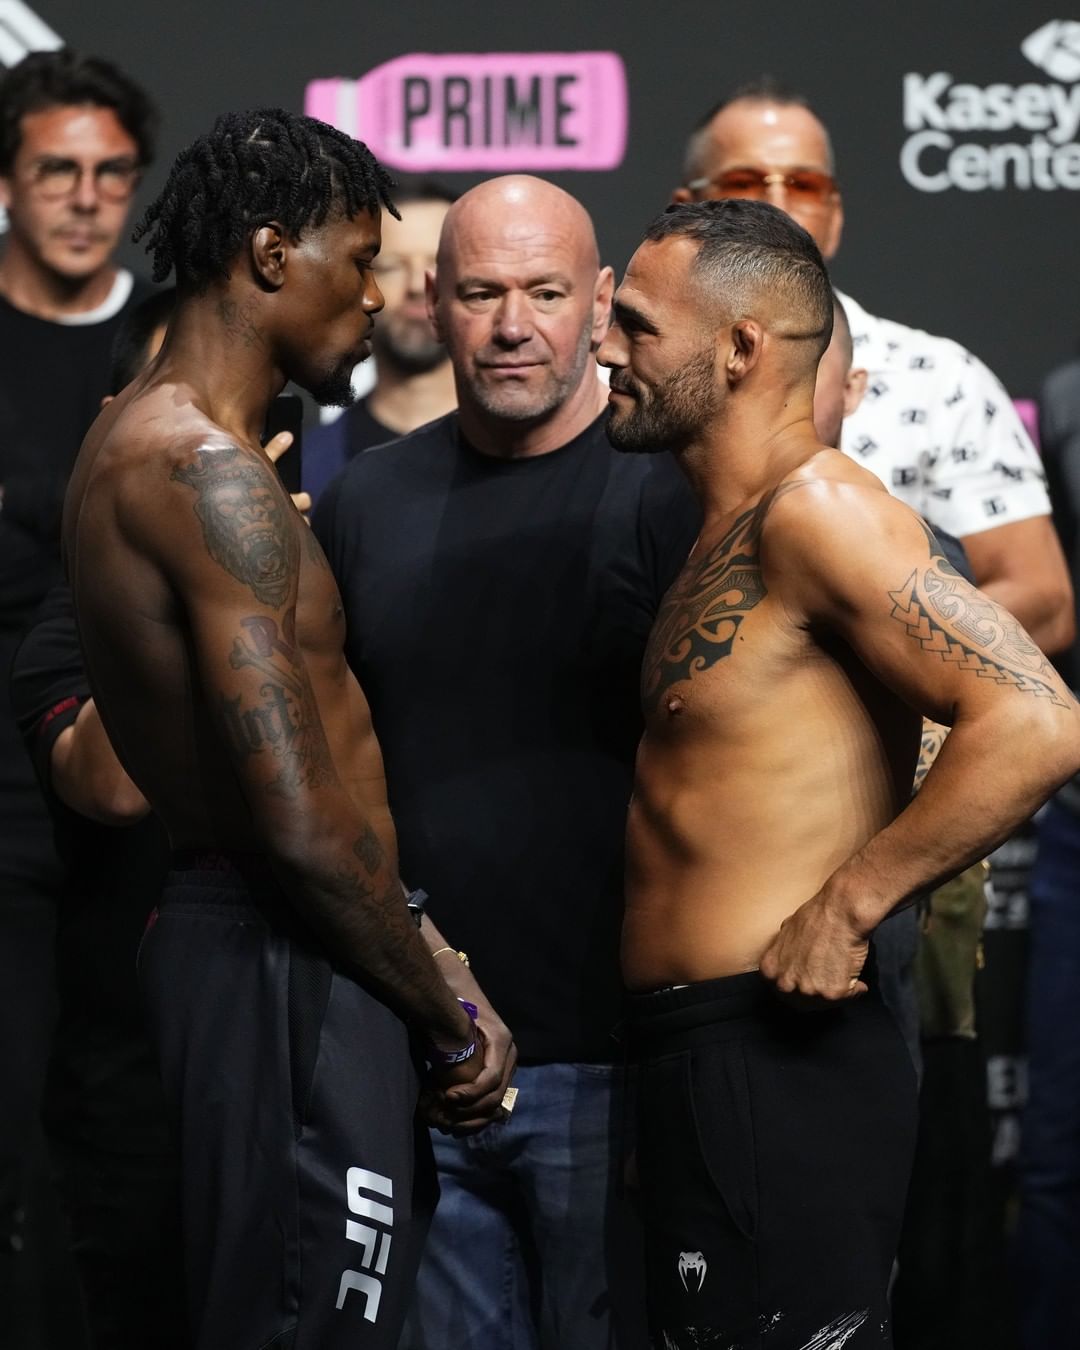 UFC 287 - Kevin Holland vs Santiago Ponzinibbio